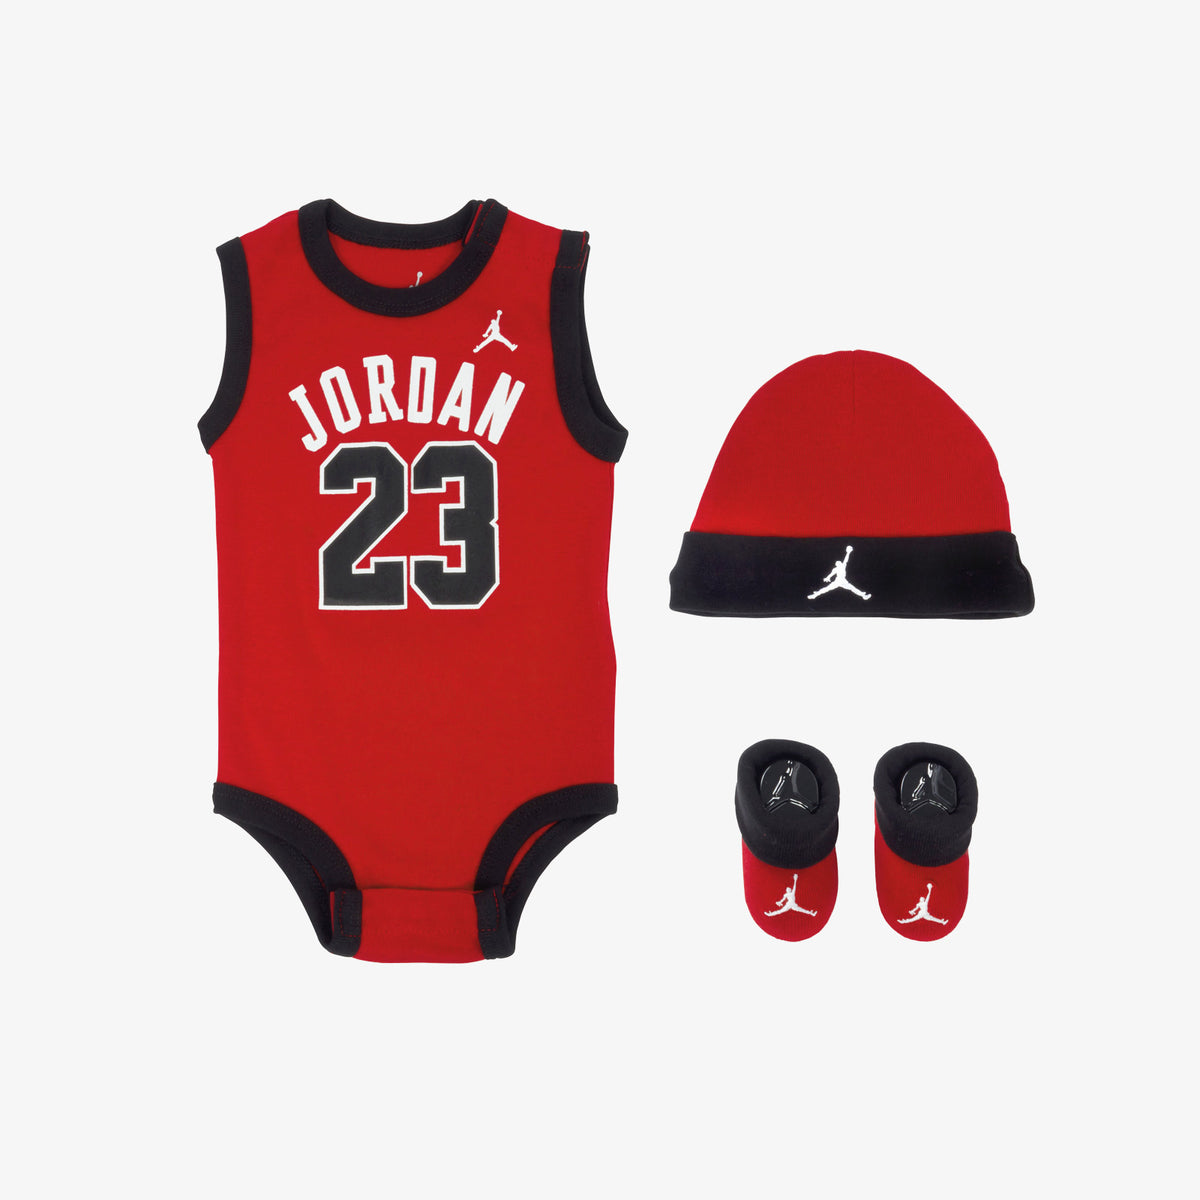 Jordan Jersey Infant 3 Piece Set - Red